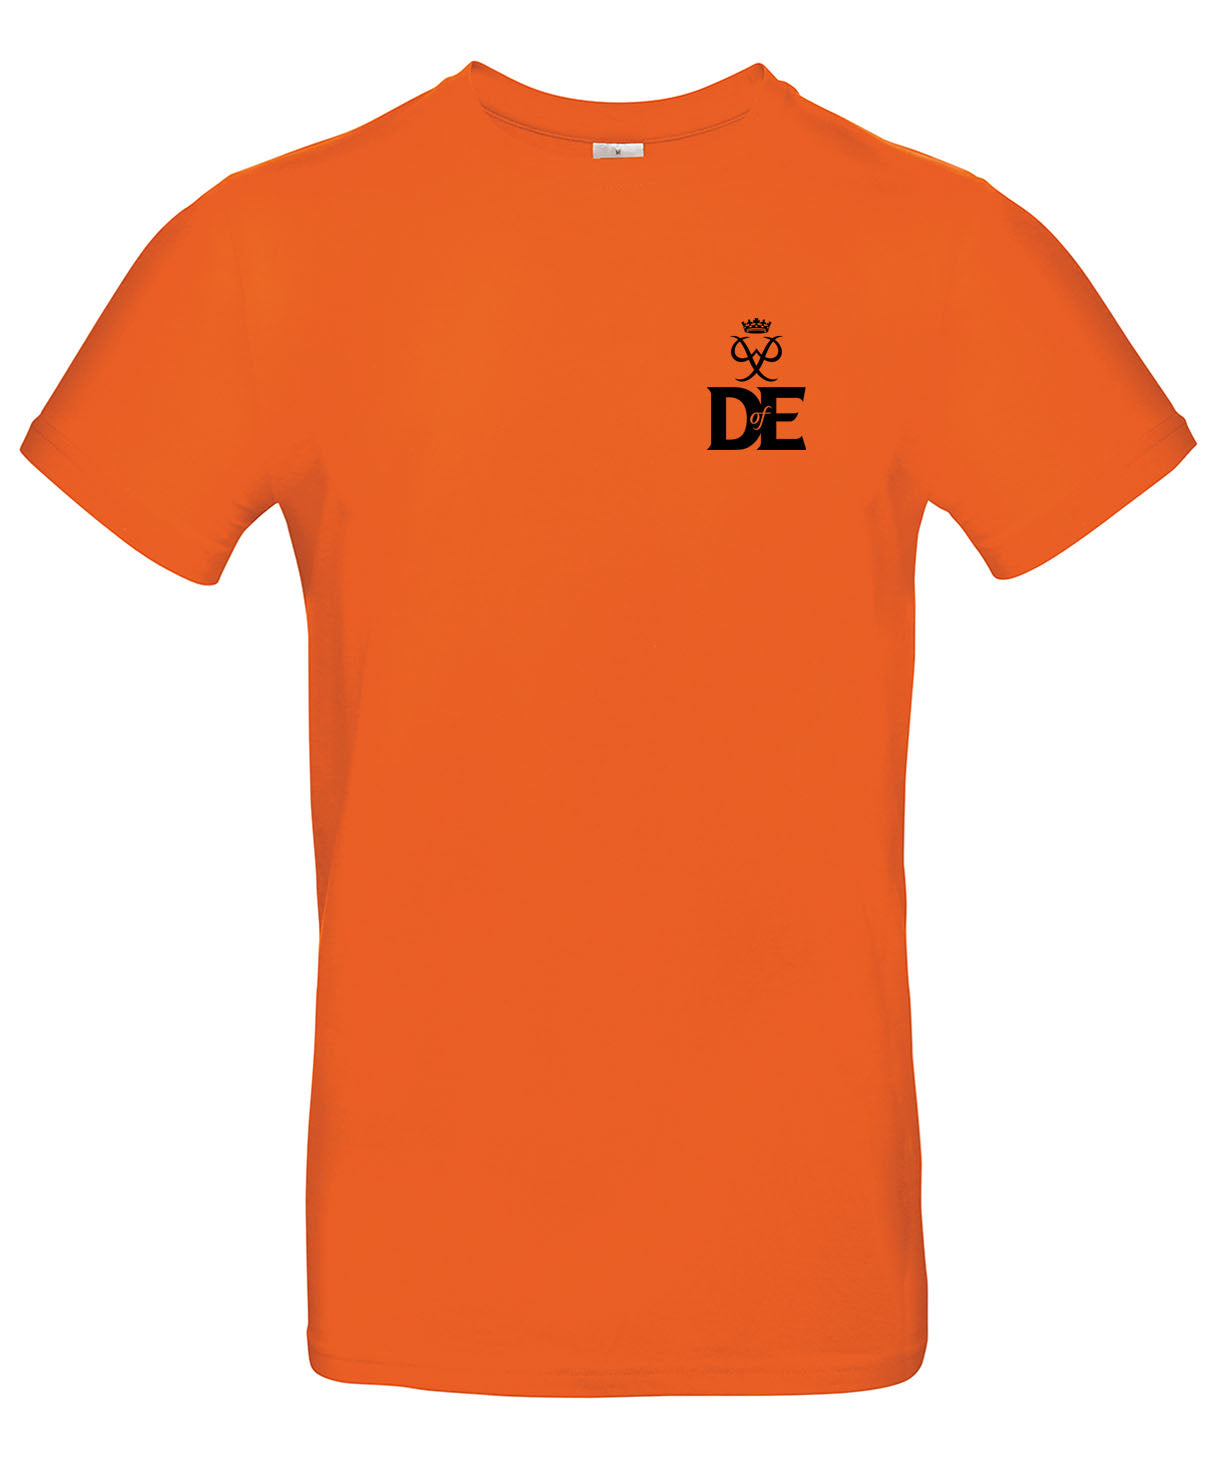 Duke of Edinburgh UNISEX T-shirt